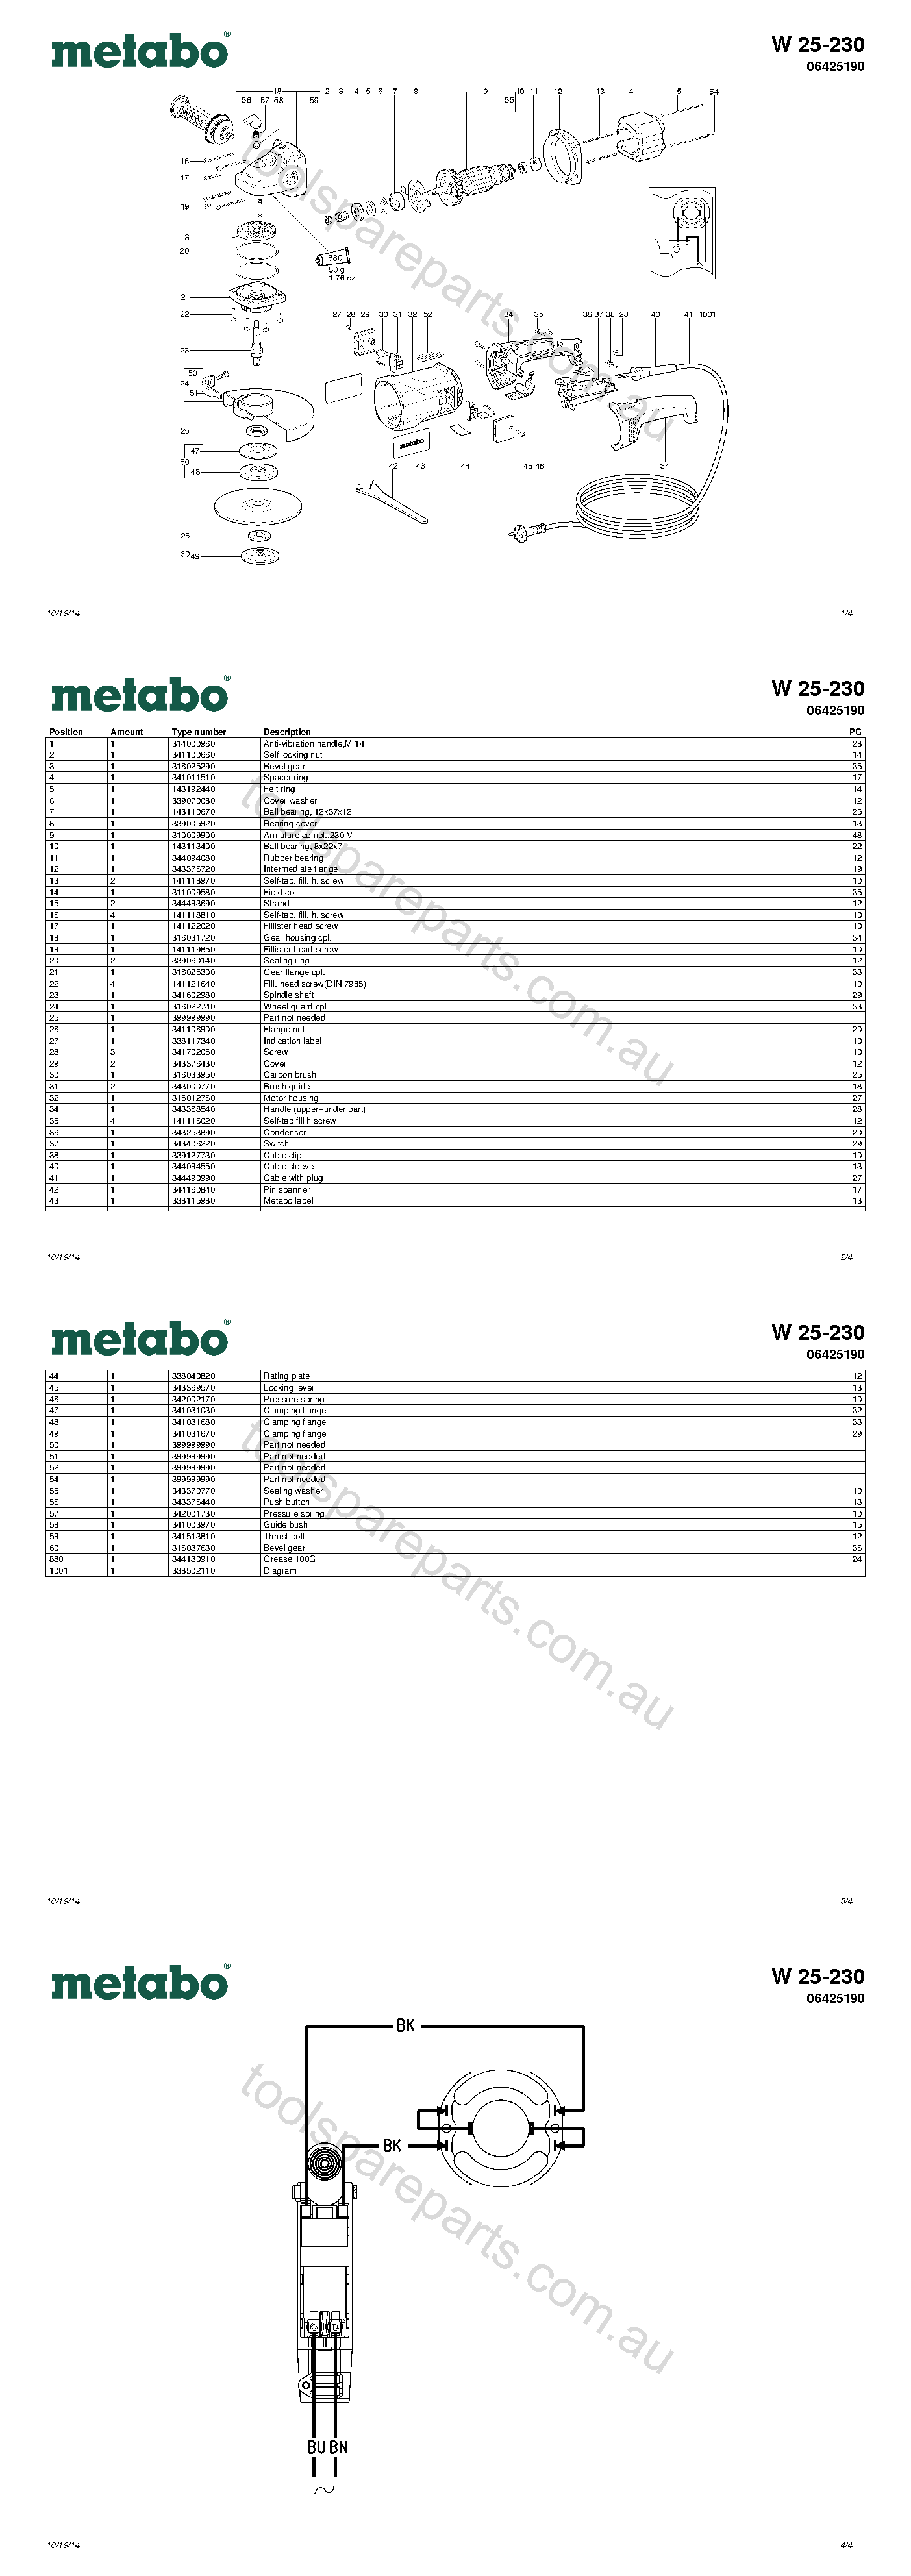 Metabo W 25-230 06425190  Diagram 1